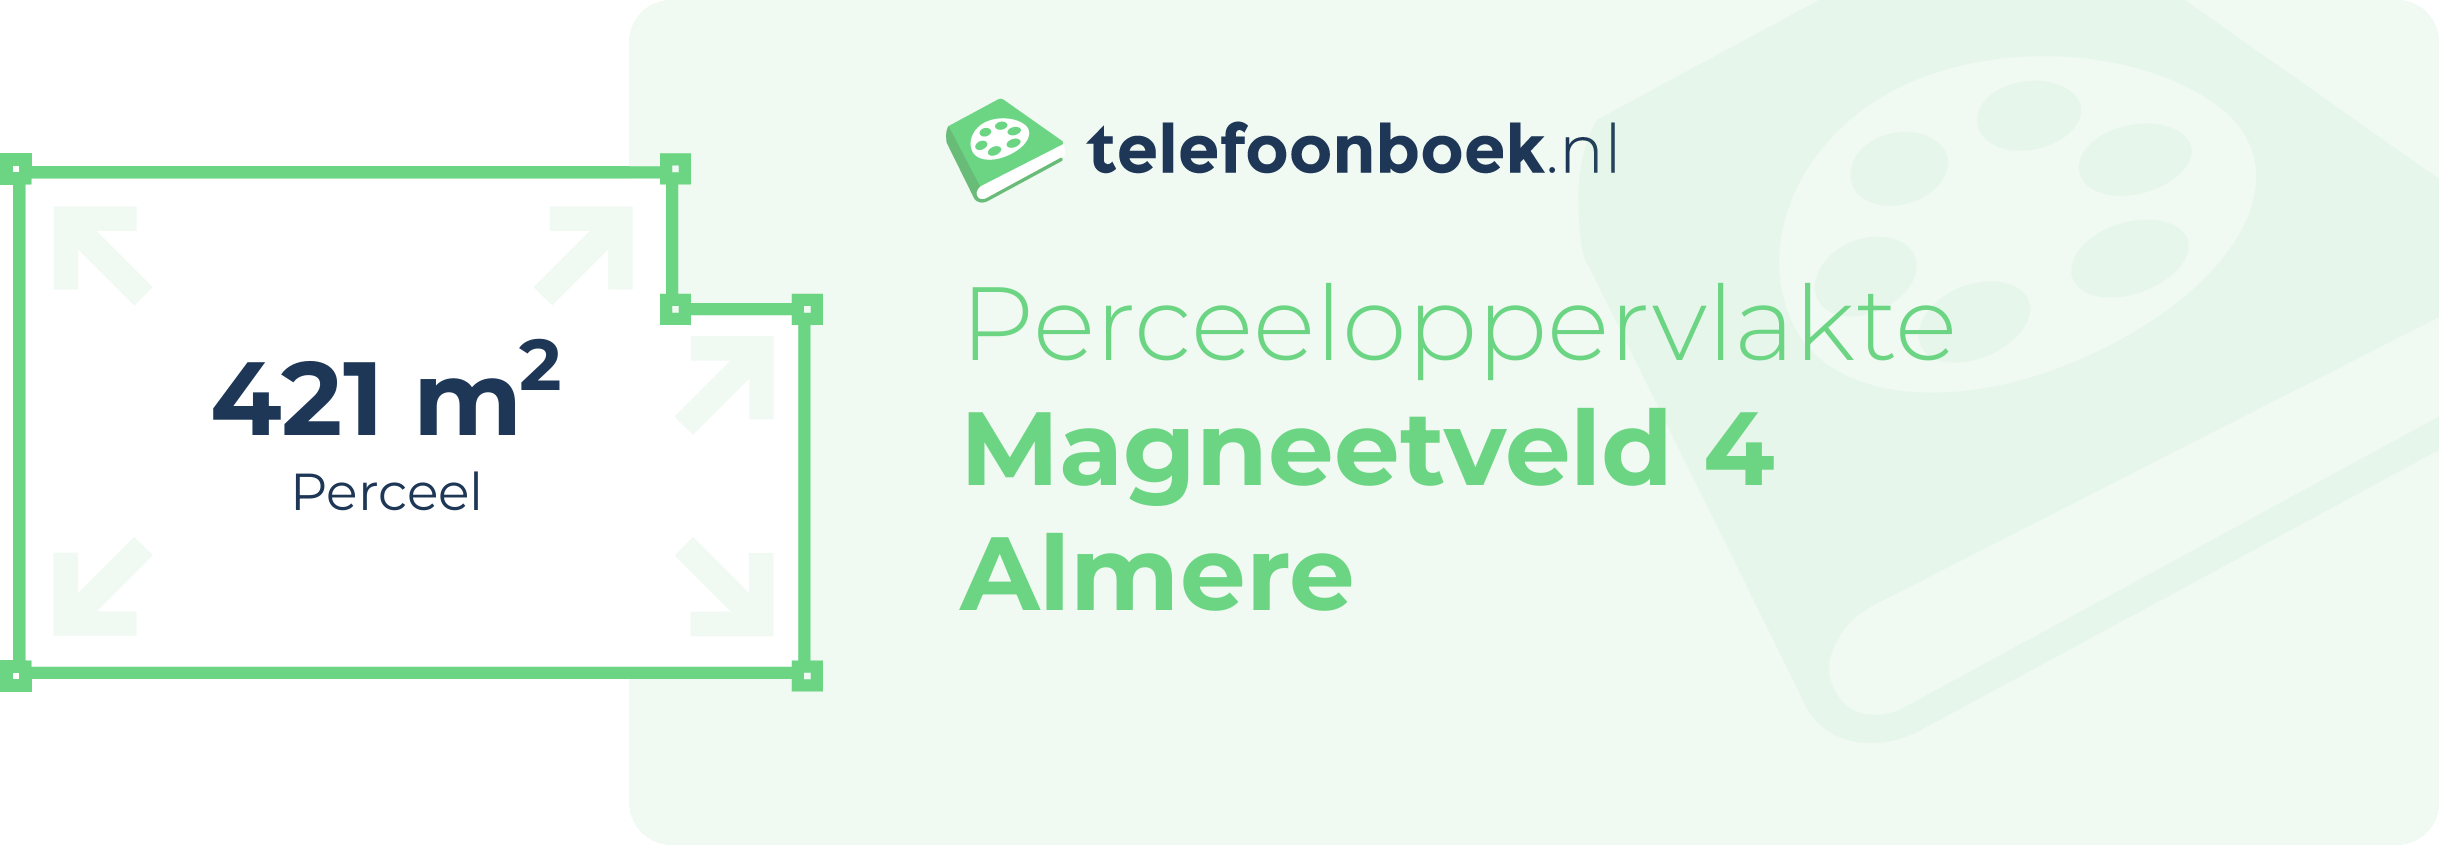 Perceeloppervlakte Magneetveld 4 Almere